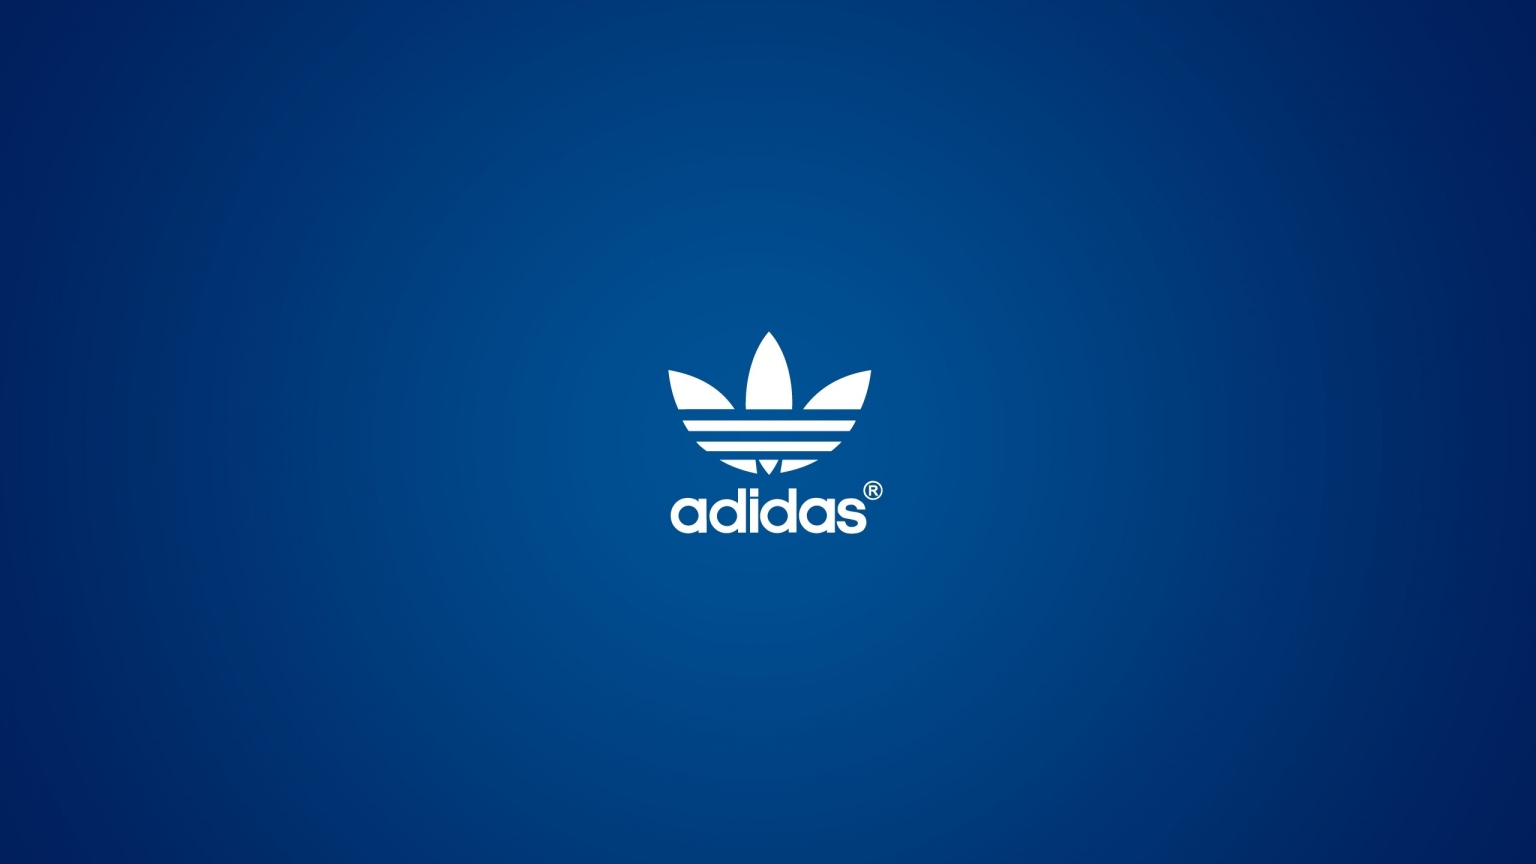 Adidas Logo for 1536 x 864 HDTV resolution